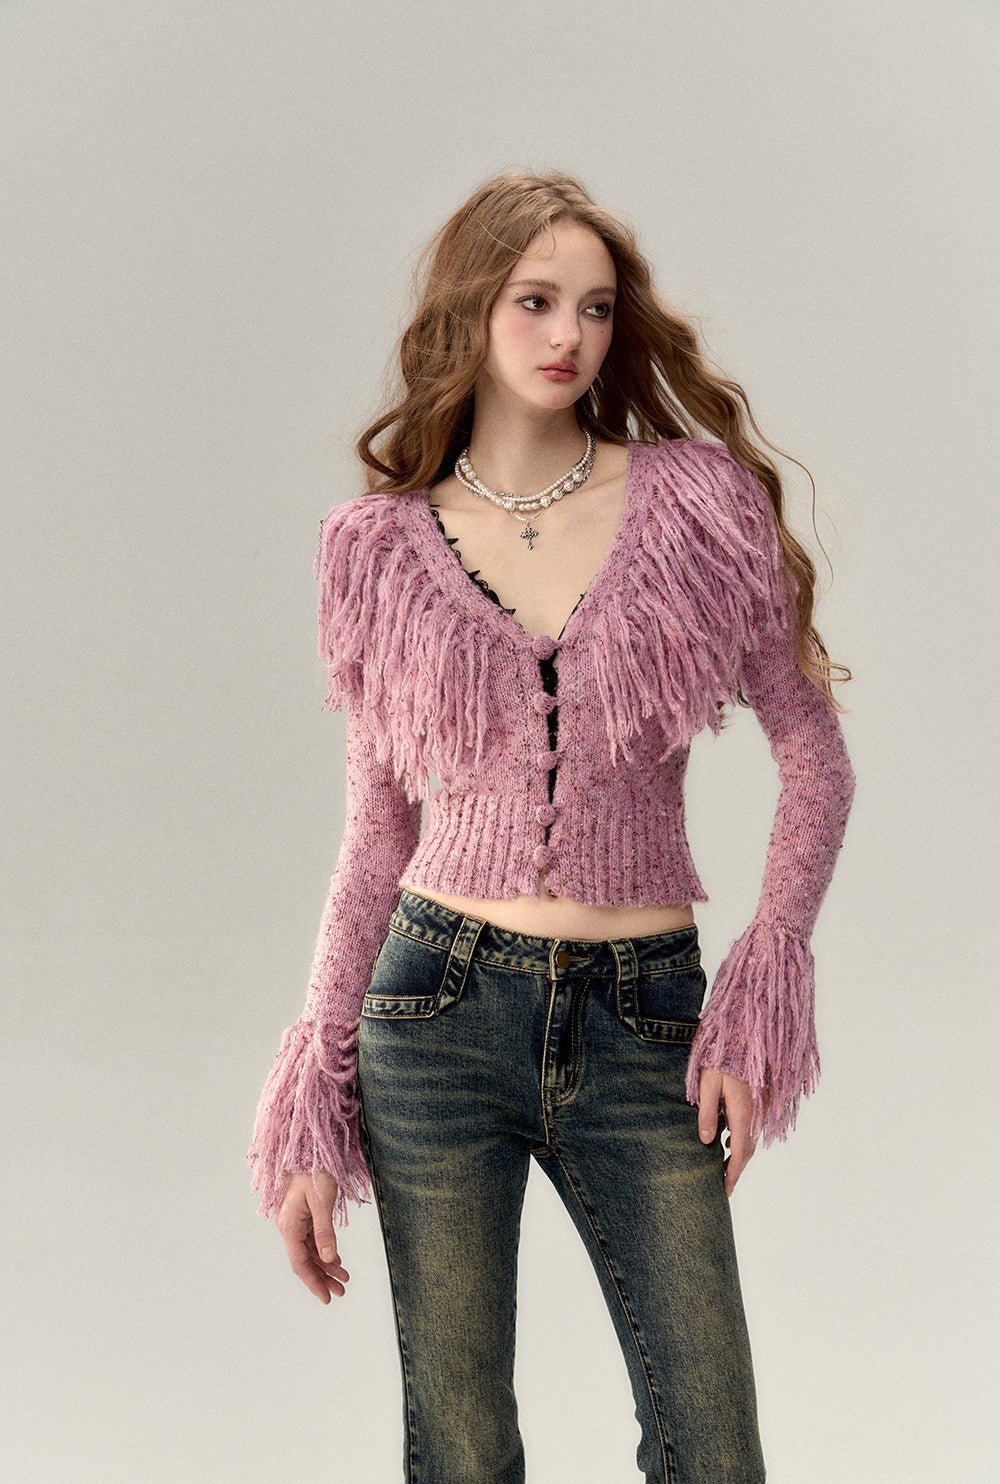 Tassel Colorful Knit Sweater Cardigan VIA0015